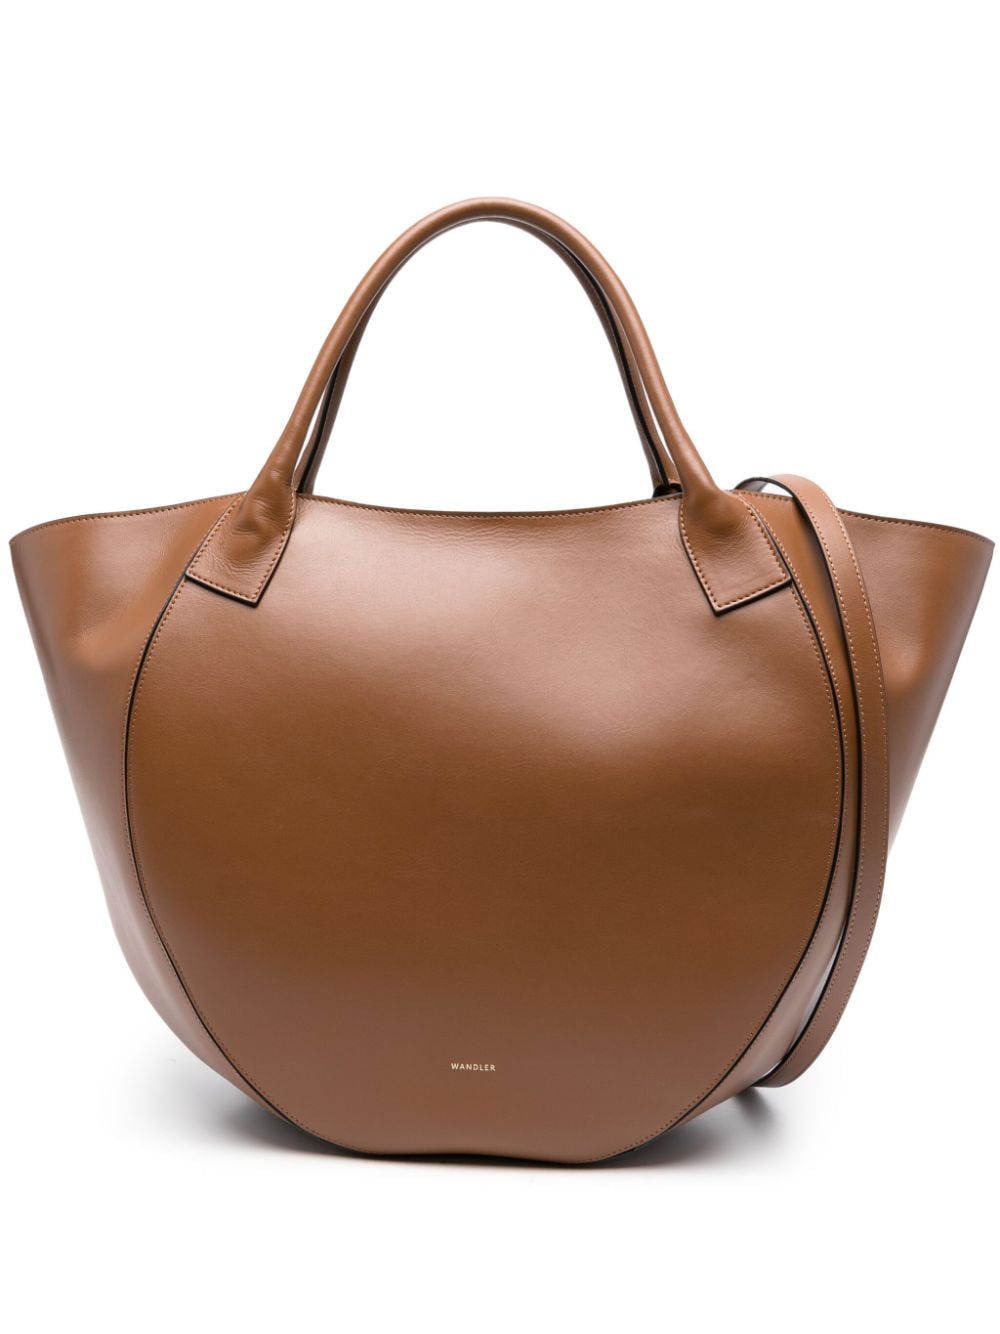 Wandler Mia Shopper leather tote bag - Brown von Wandler